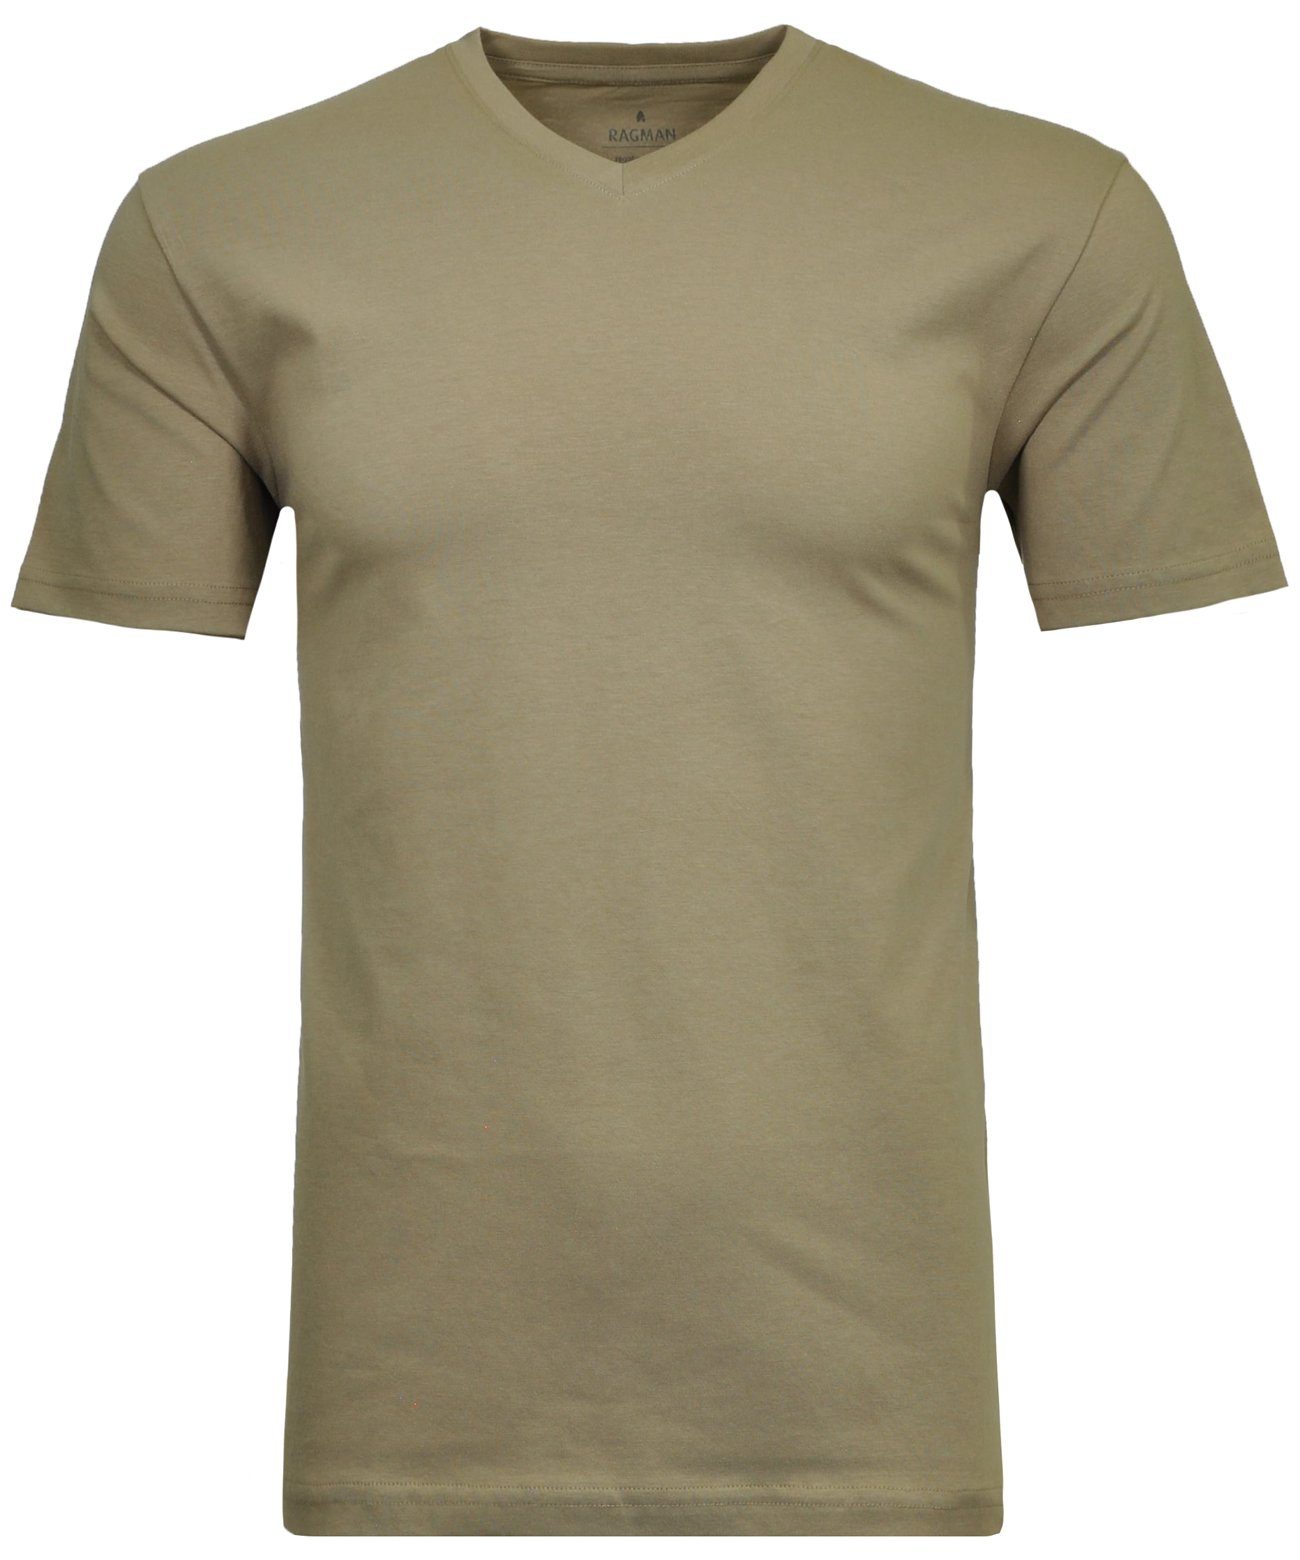 T-Shirt Kitt-881 RAGMAN